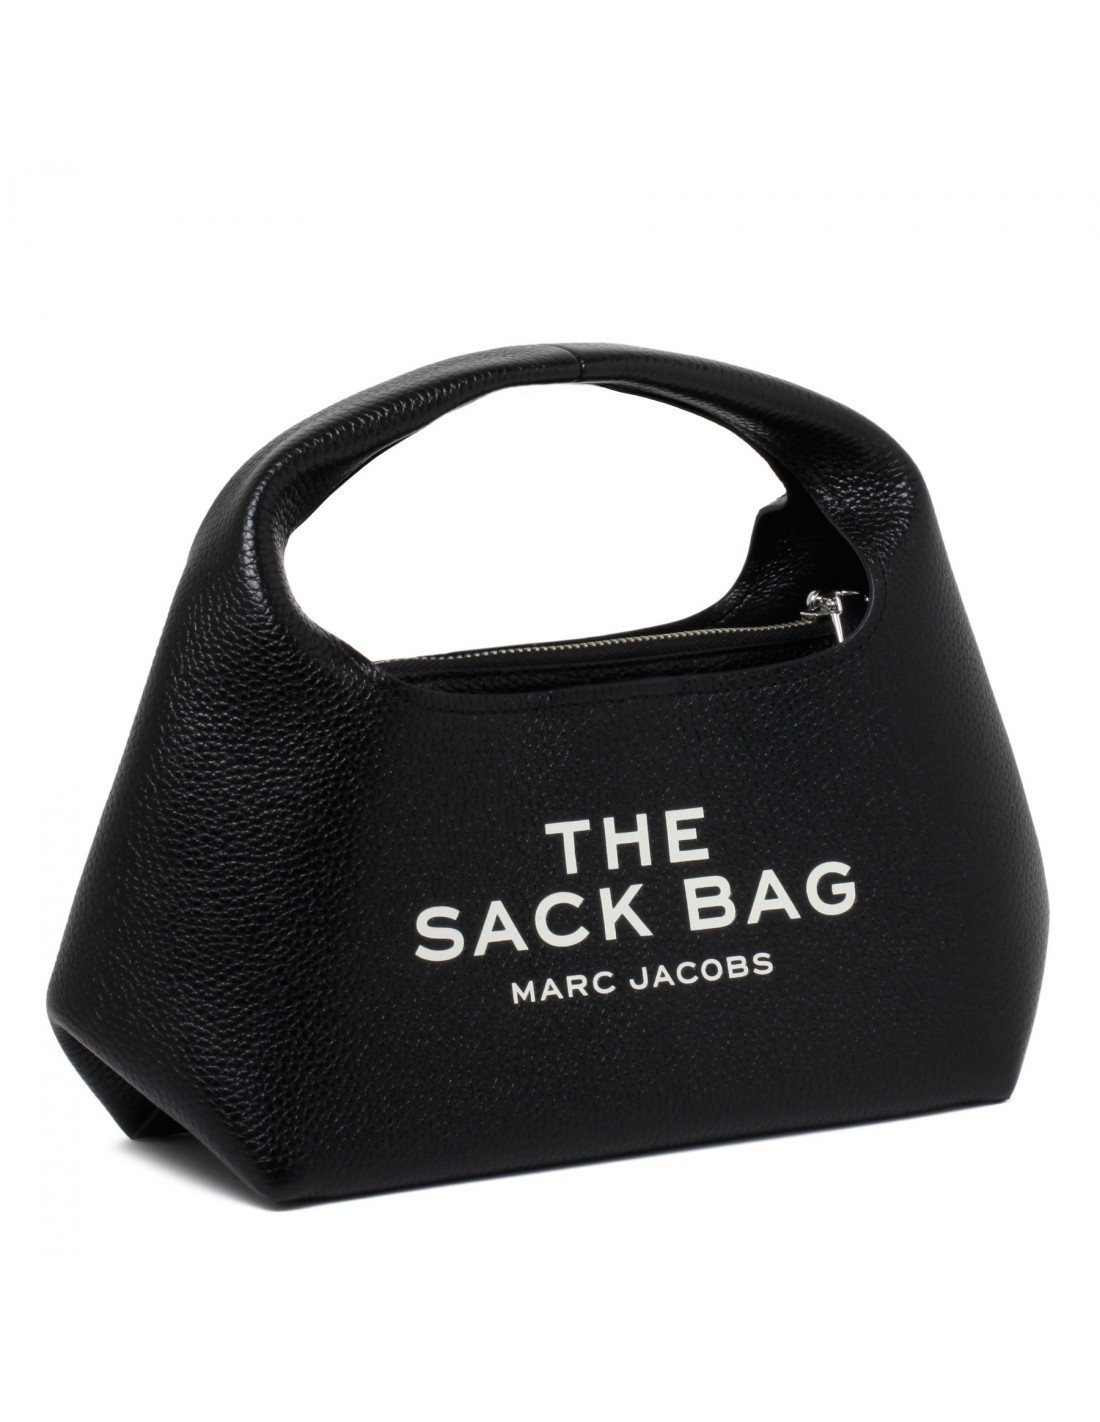 The Mini Sack bag